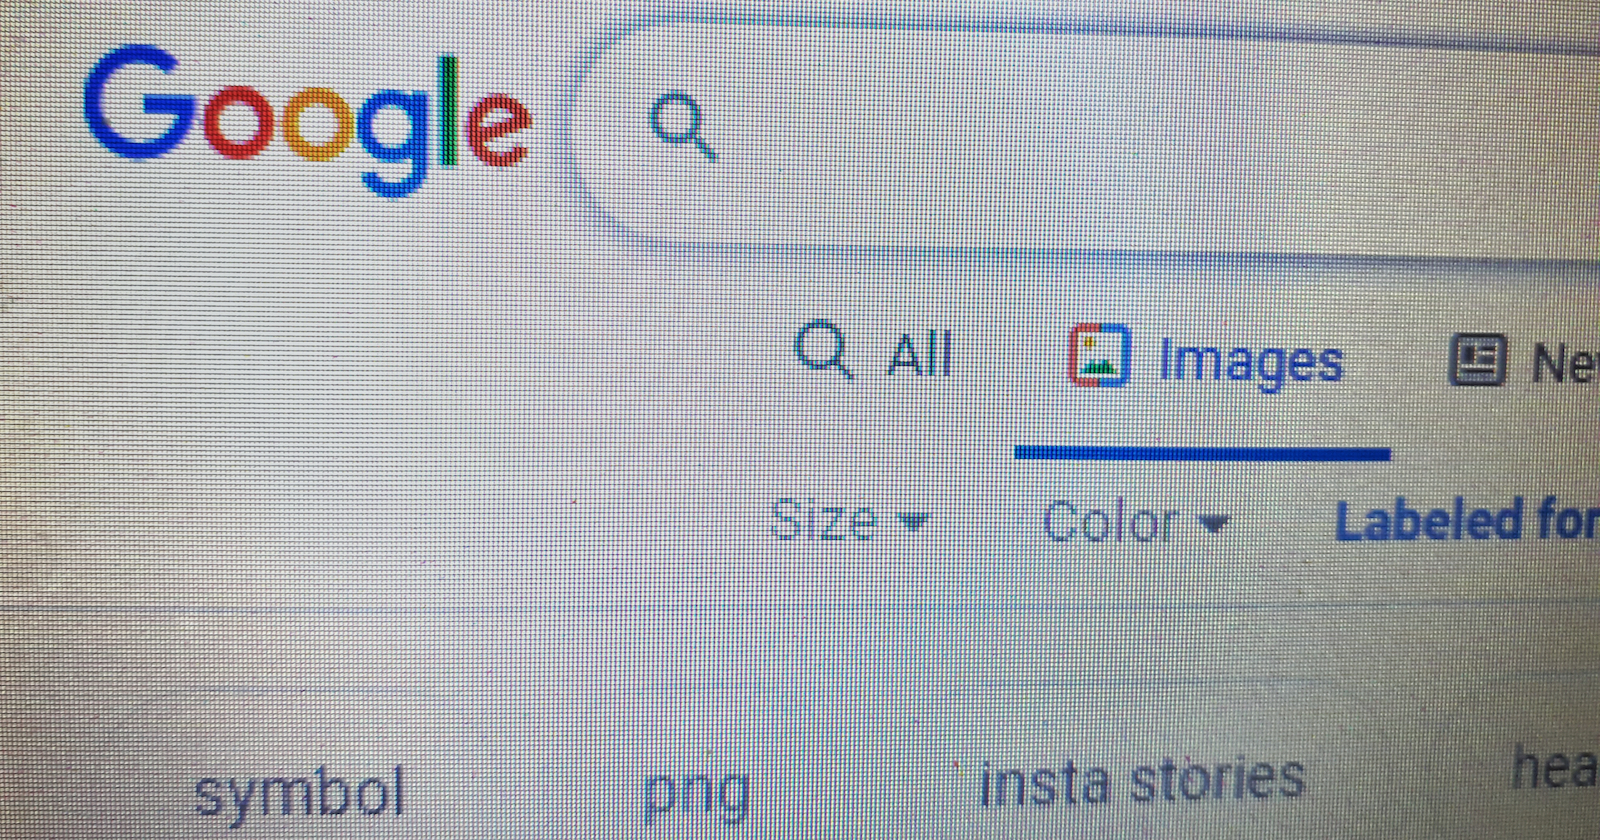 Google Image Search Change